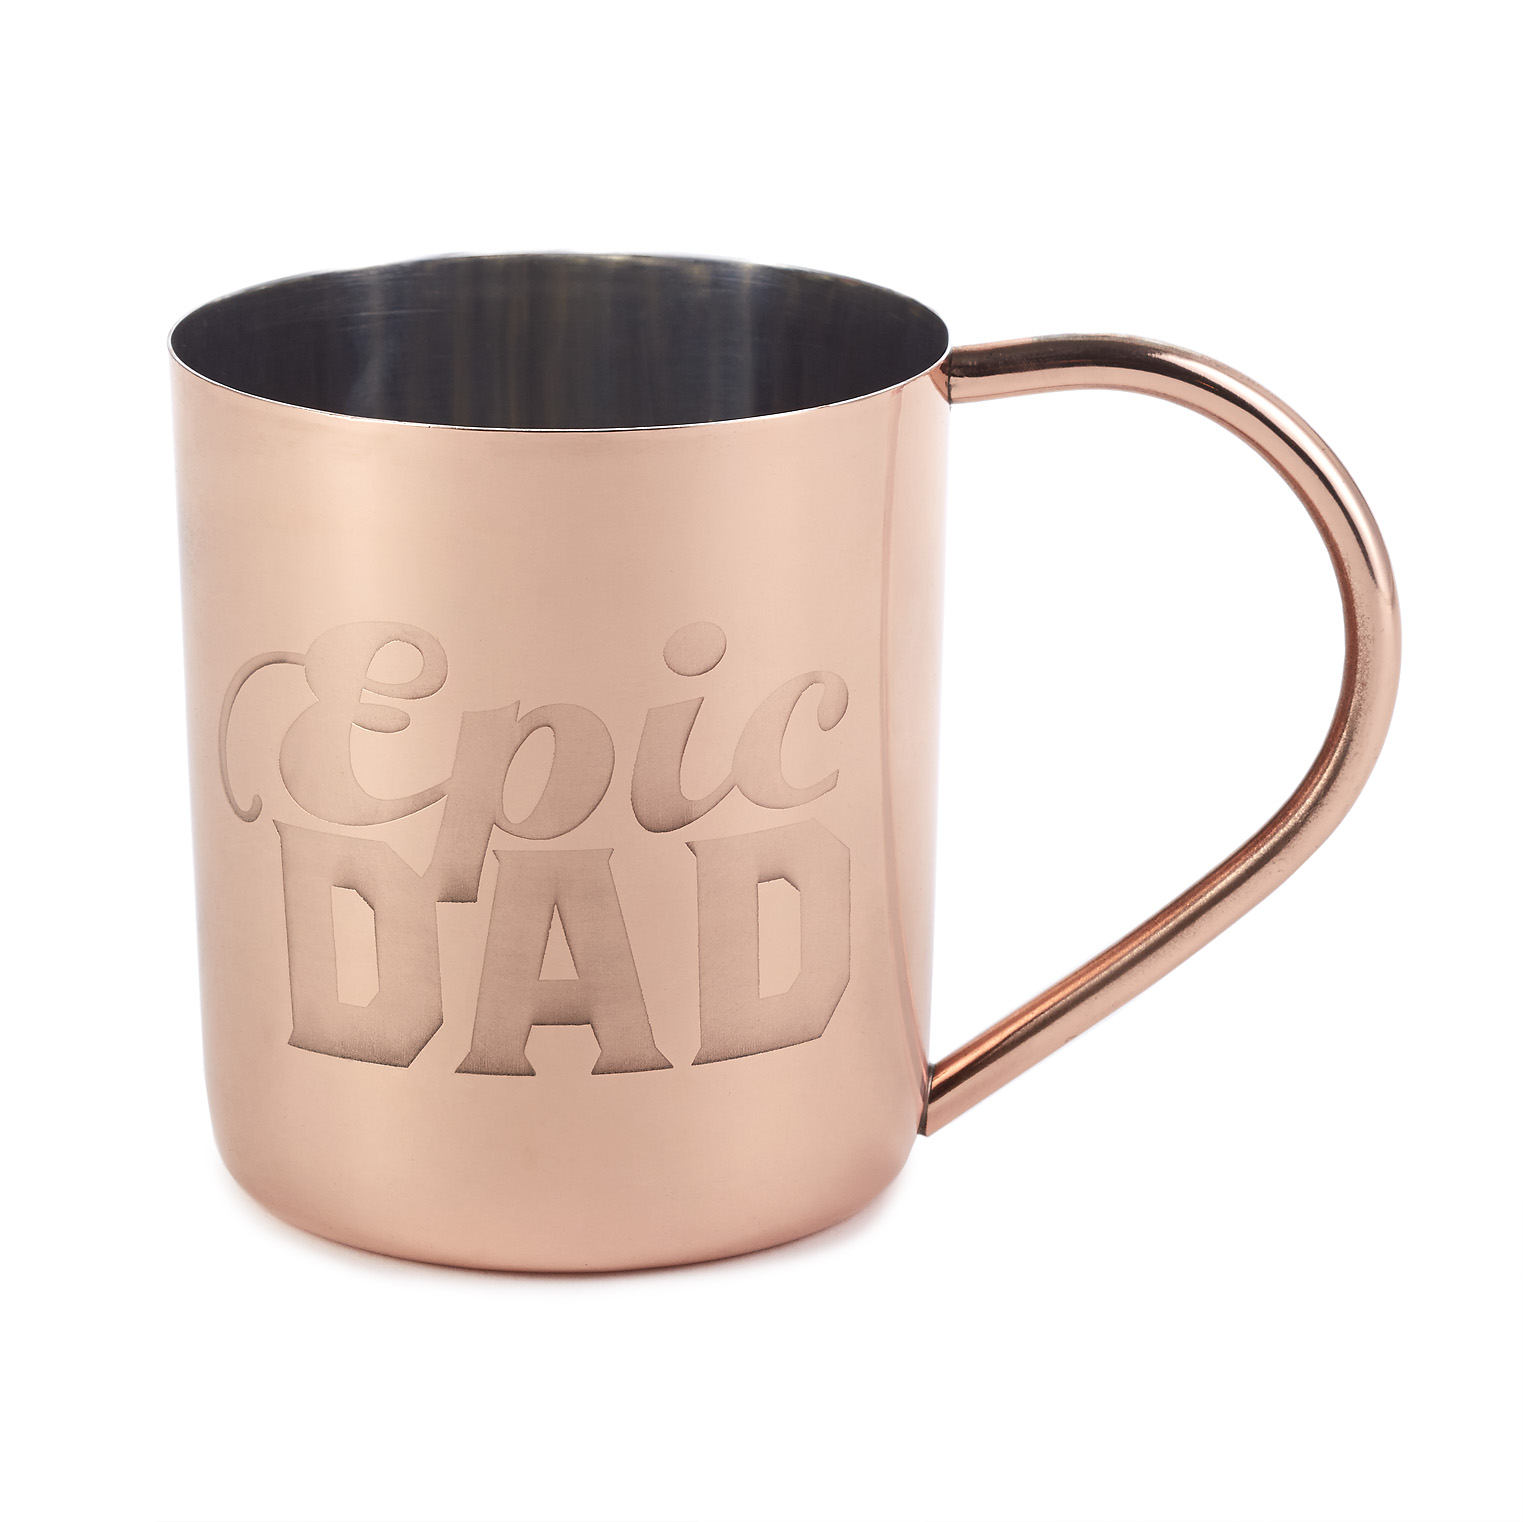 Epic Dad Copper Mug - $16.95